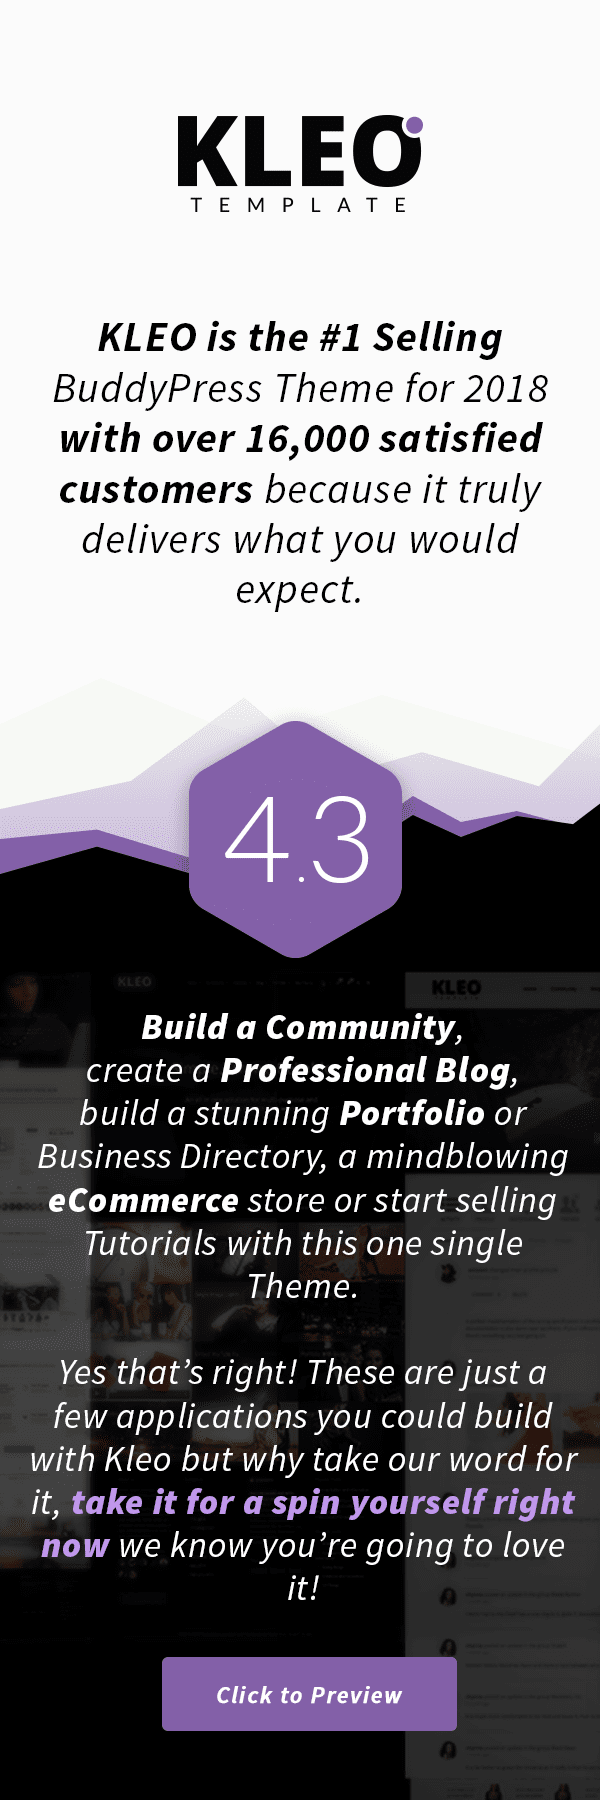 kleo february min updated - KLEO - Pro Community Focused, Multi-Purpose BuddyPress Theme